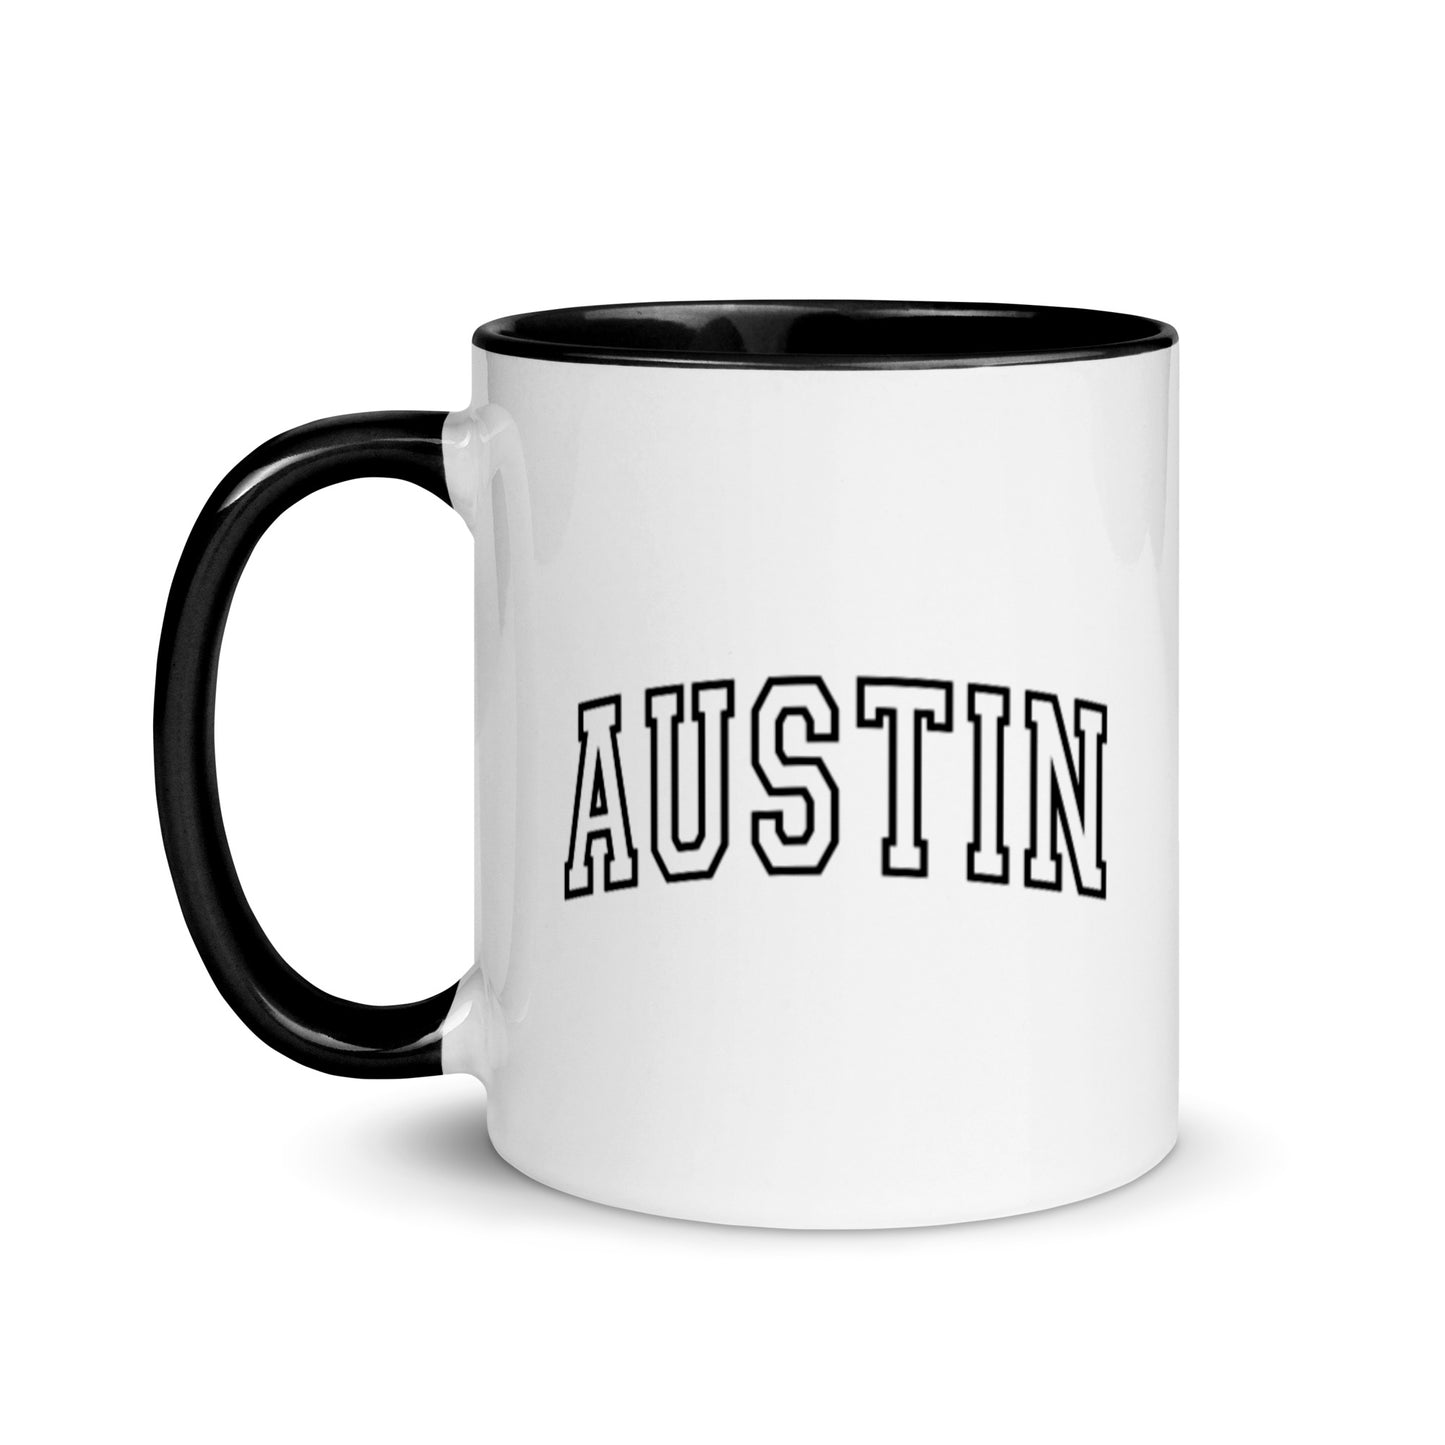 Austin Mug with Color Inside